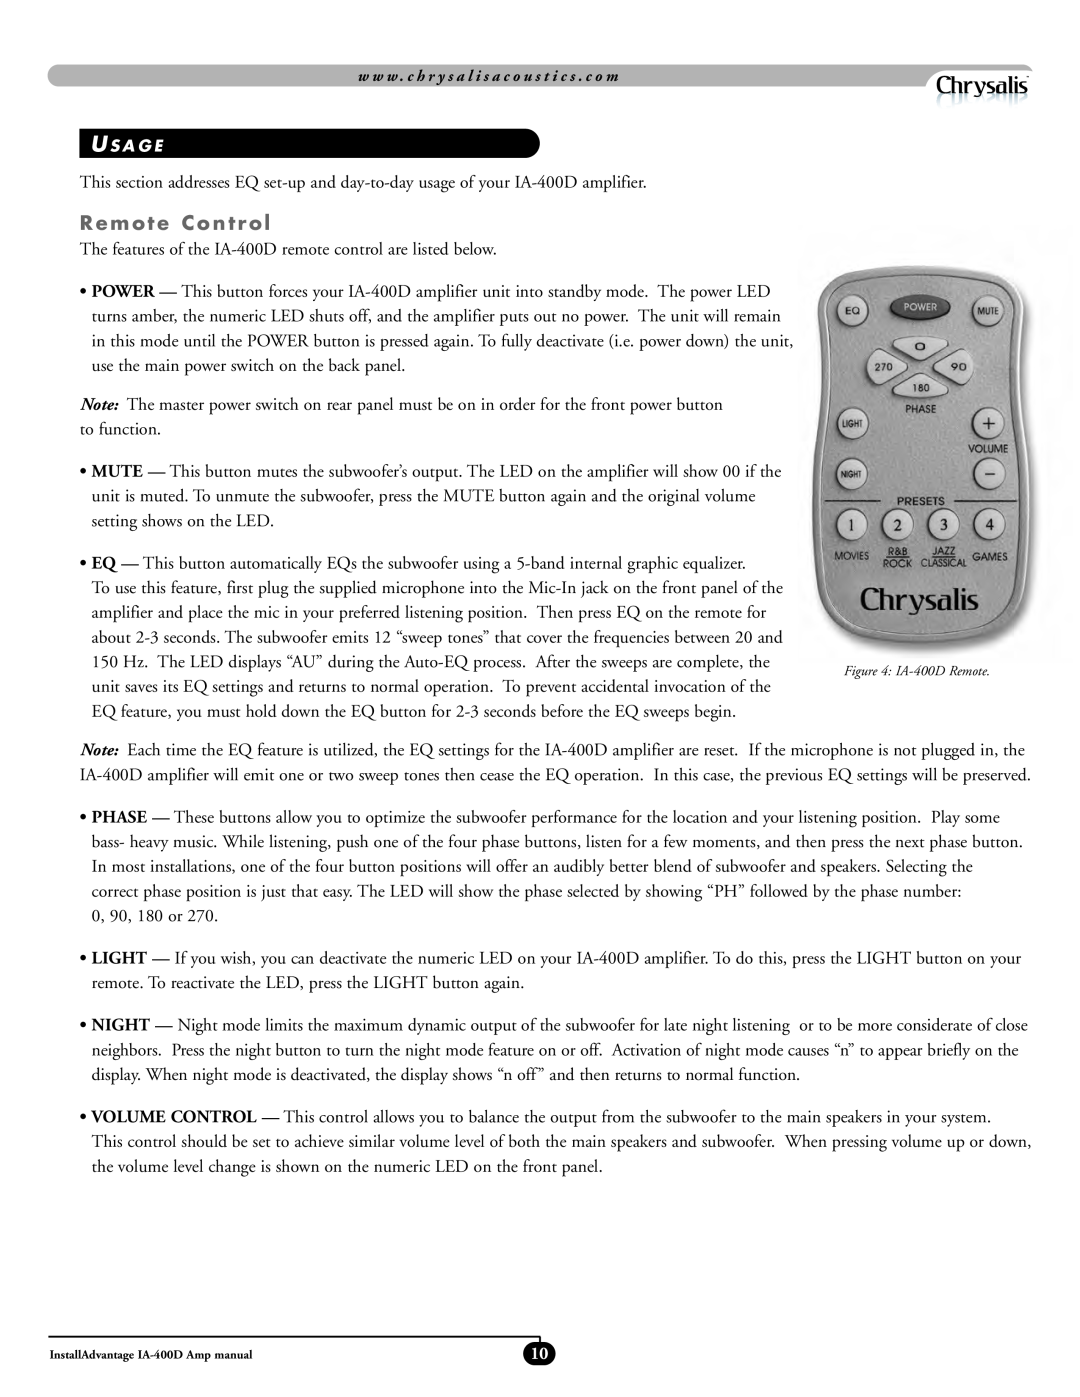 Chrysler IA-IWS1, IA-400D manual Remote Control 